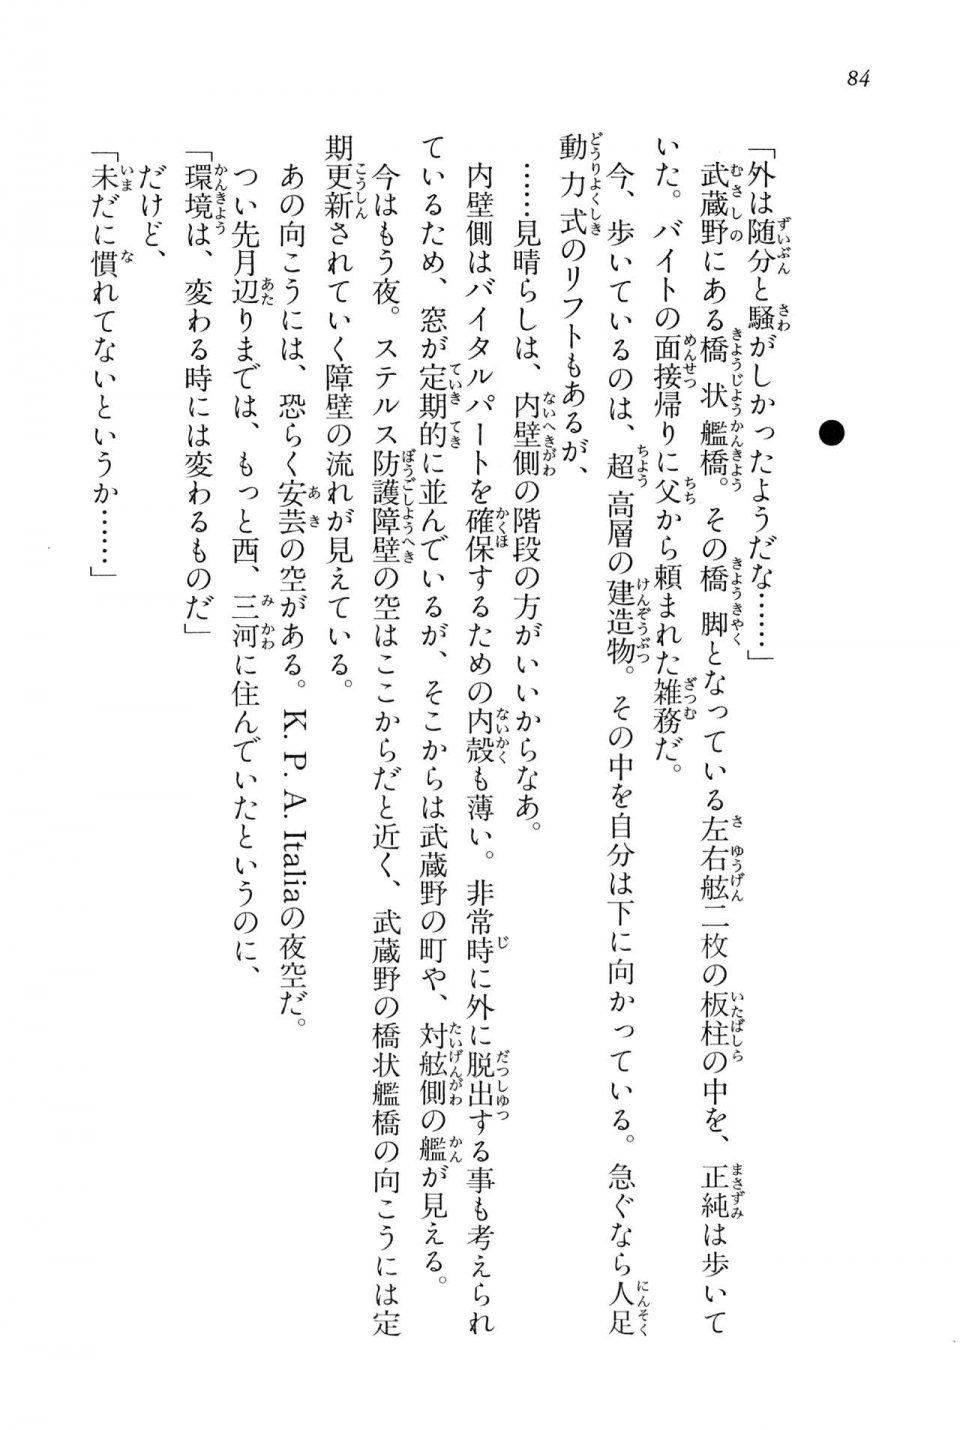 Kyoukai Senjou no Horizon BD Special Mininovel Vol 4(2B) - Photo #88